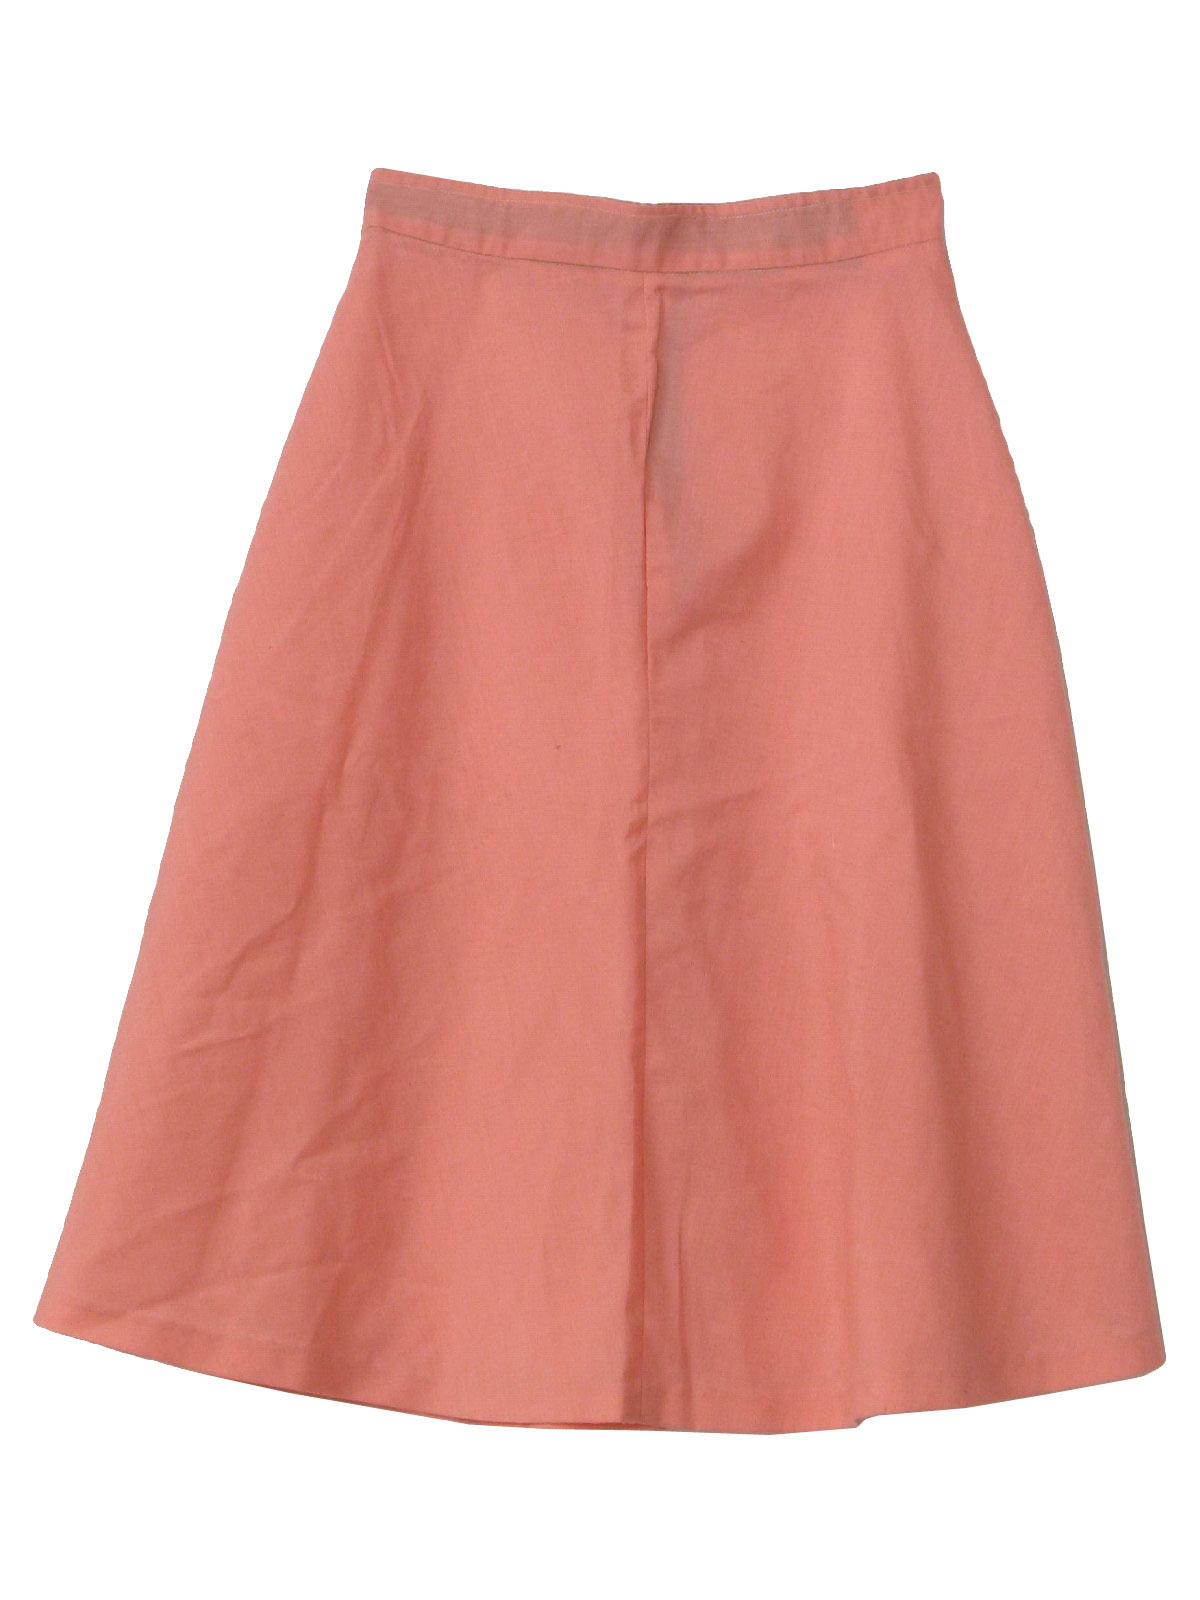 Retro 1960's Skirt (home sewn) : 60s -home sewn- Womens or Girls light ...